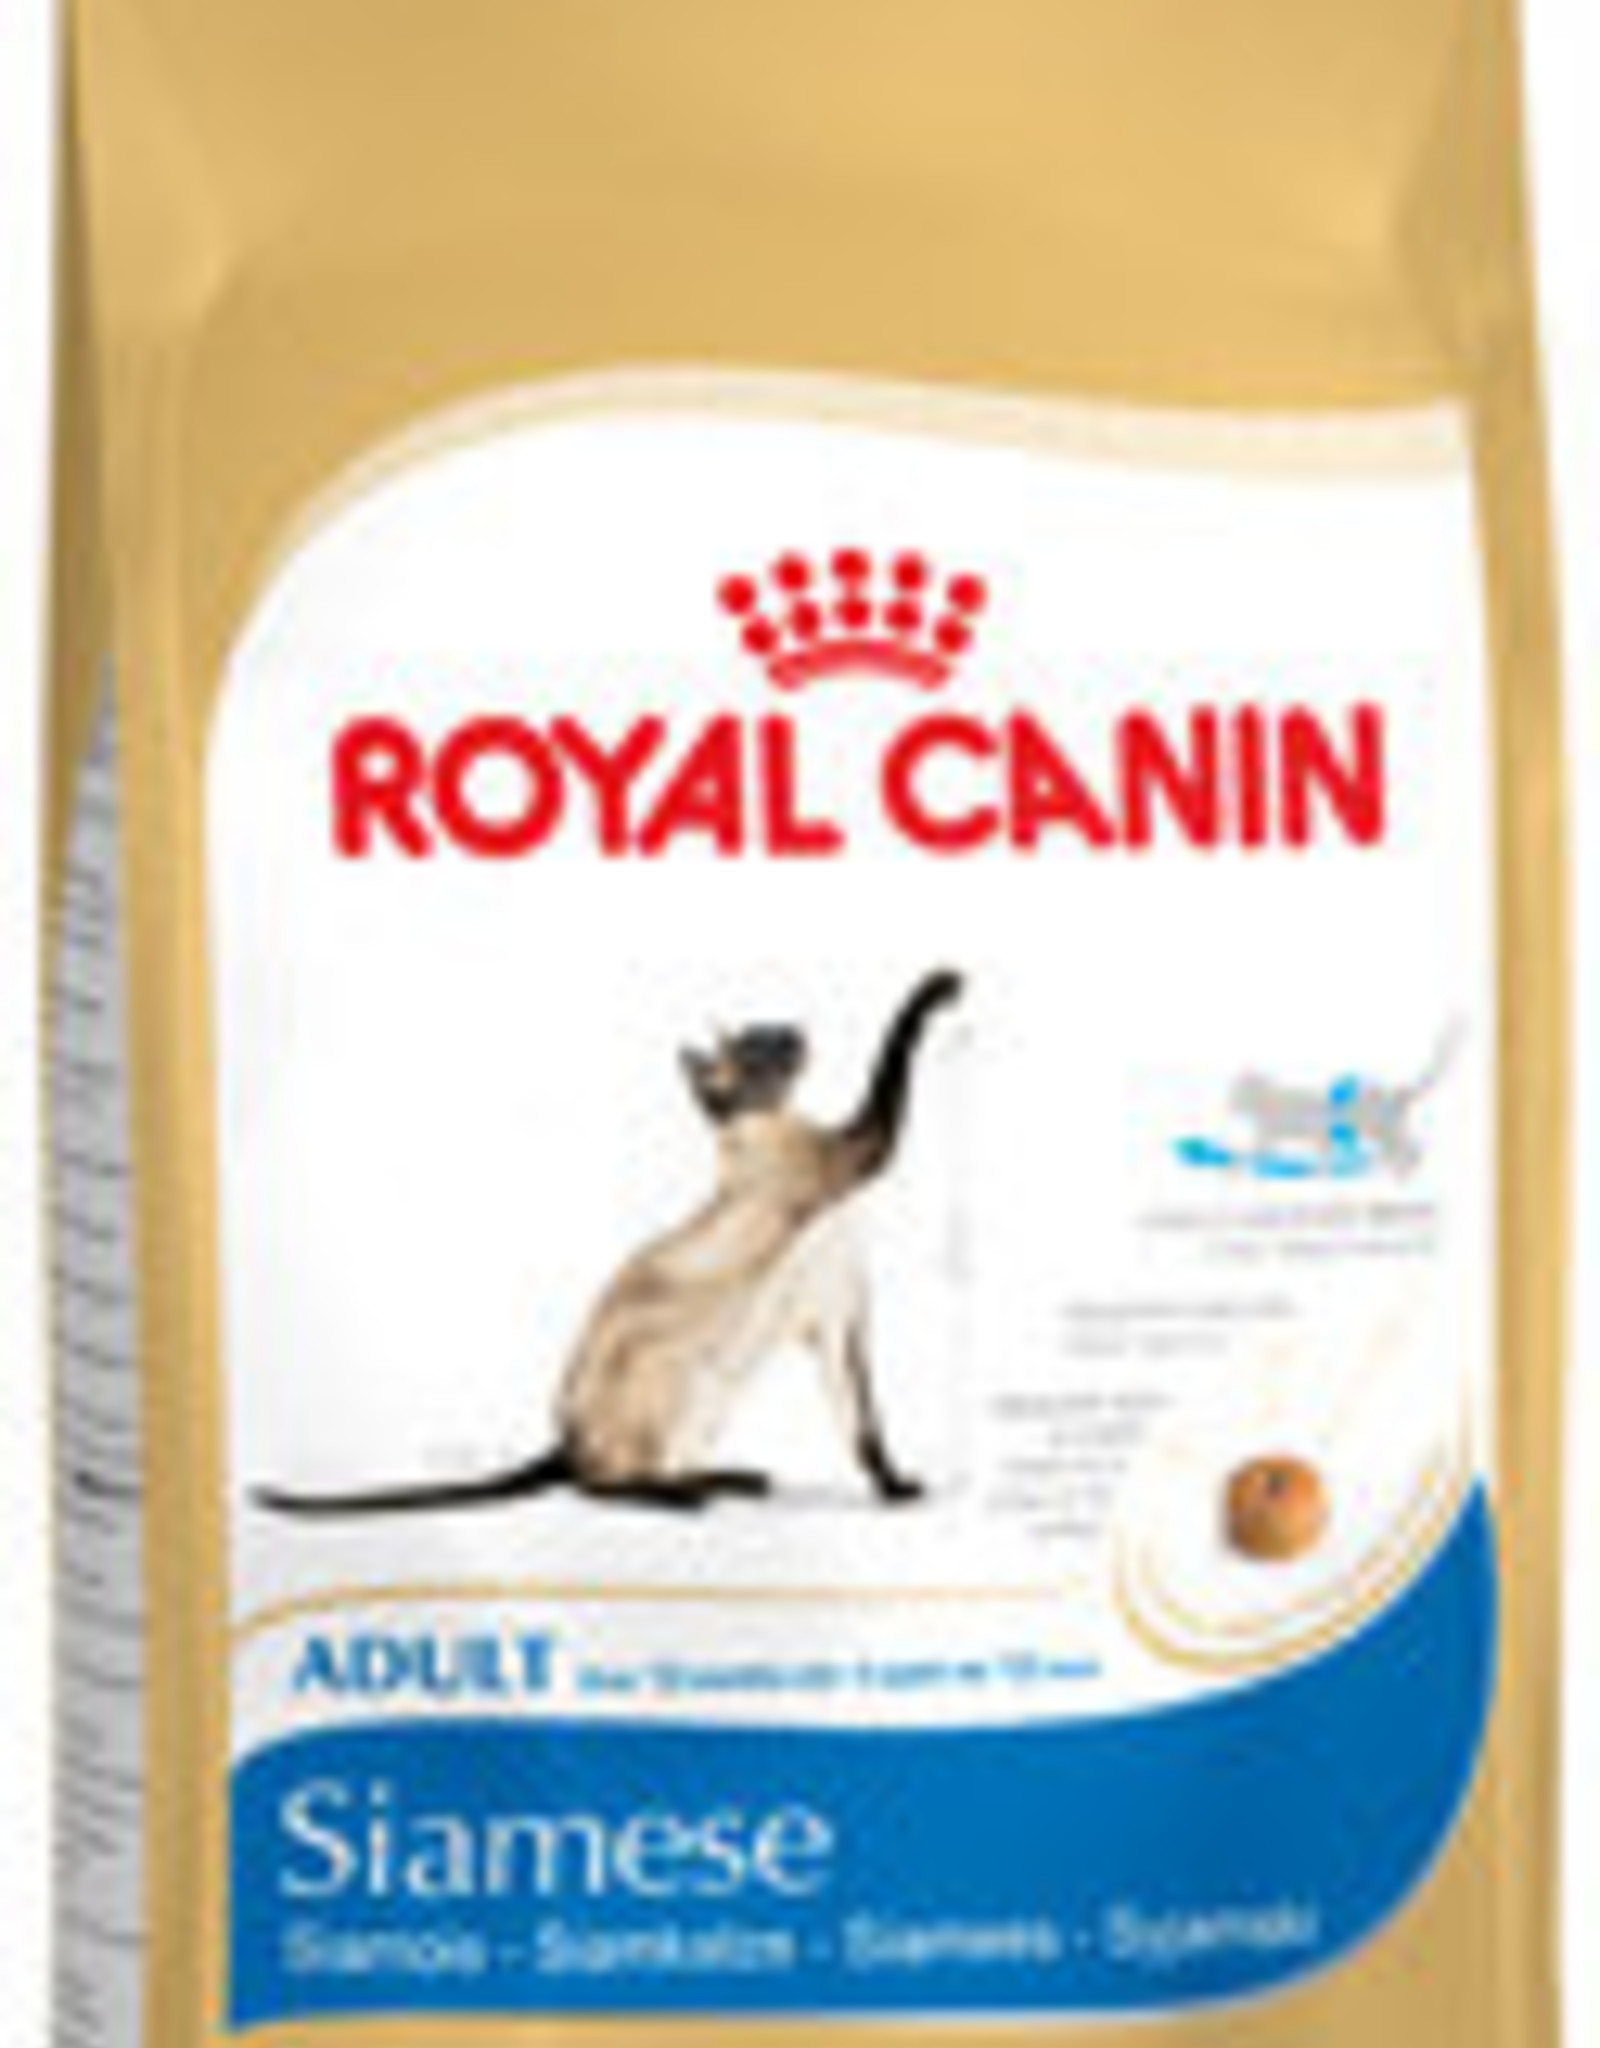 Royal Canin Royal Canin Fbn Siamese 38 10kg